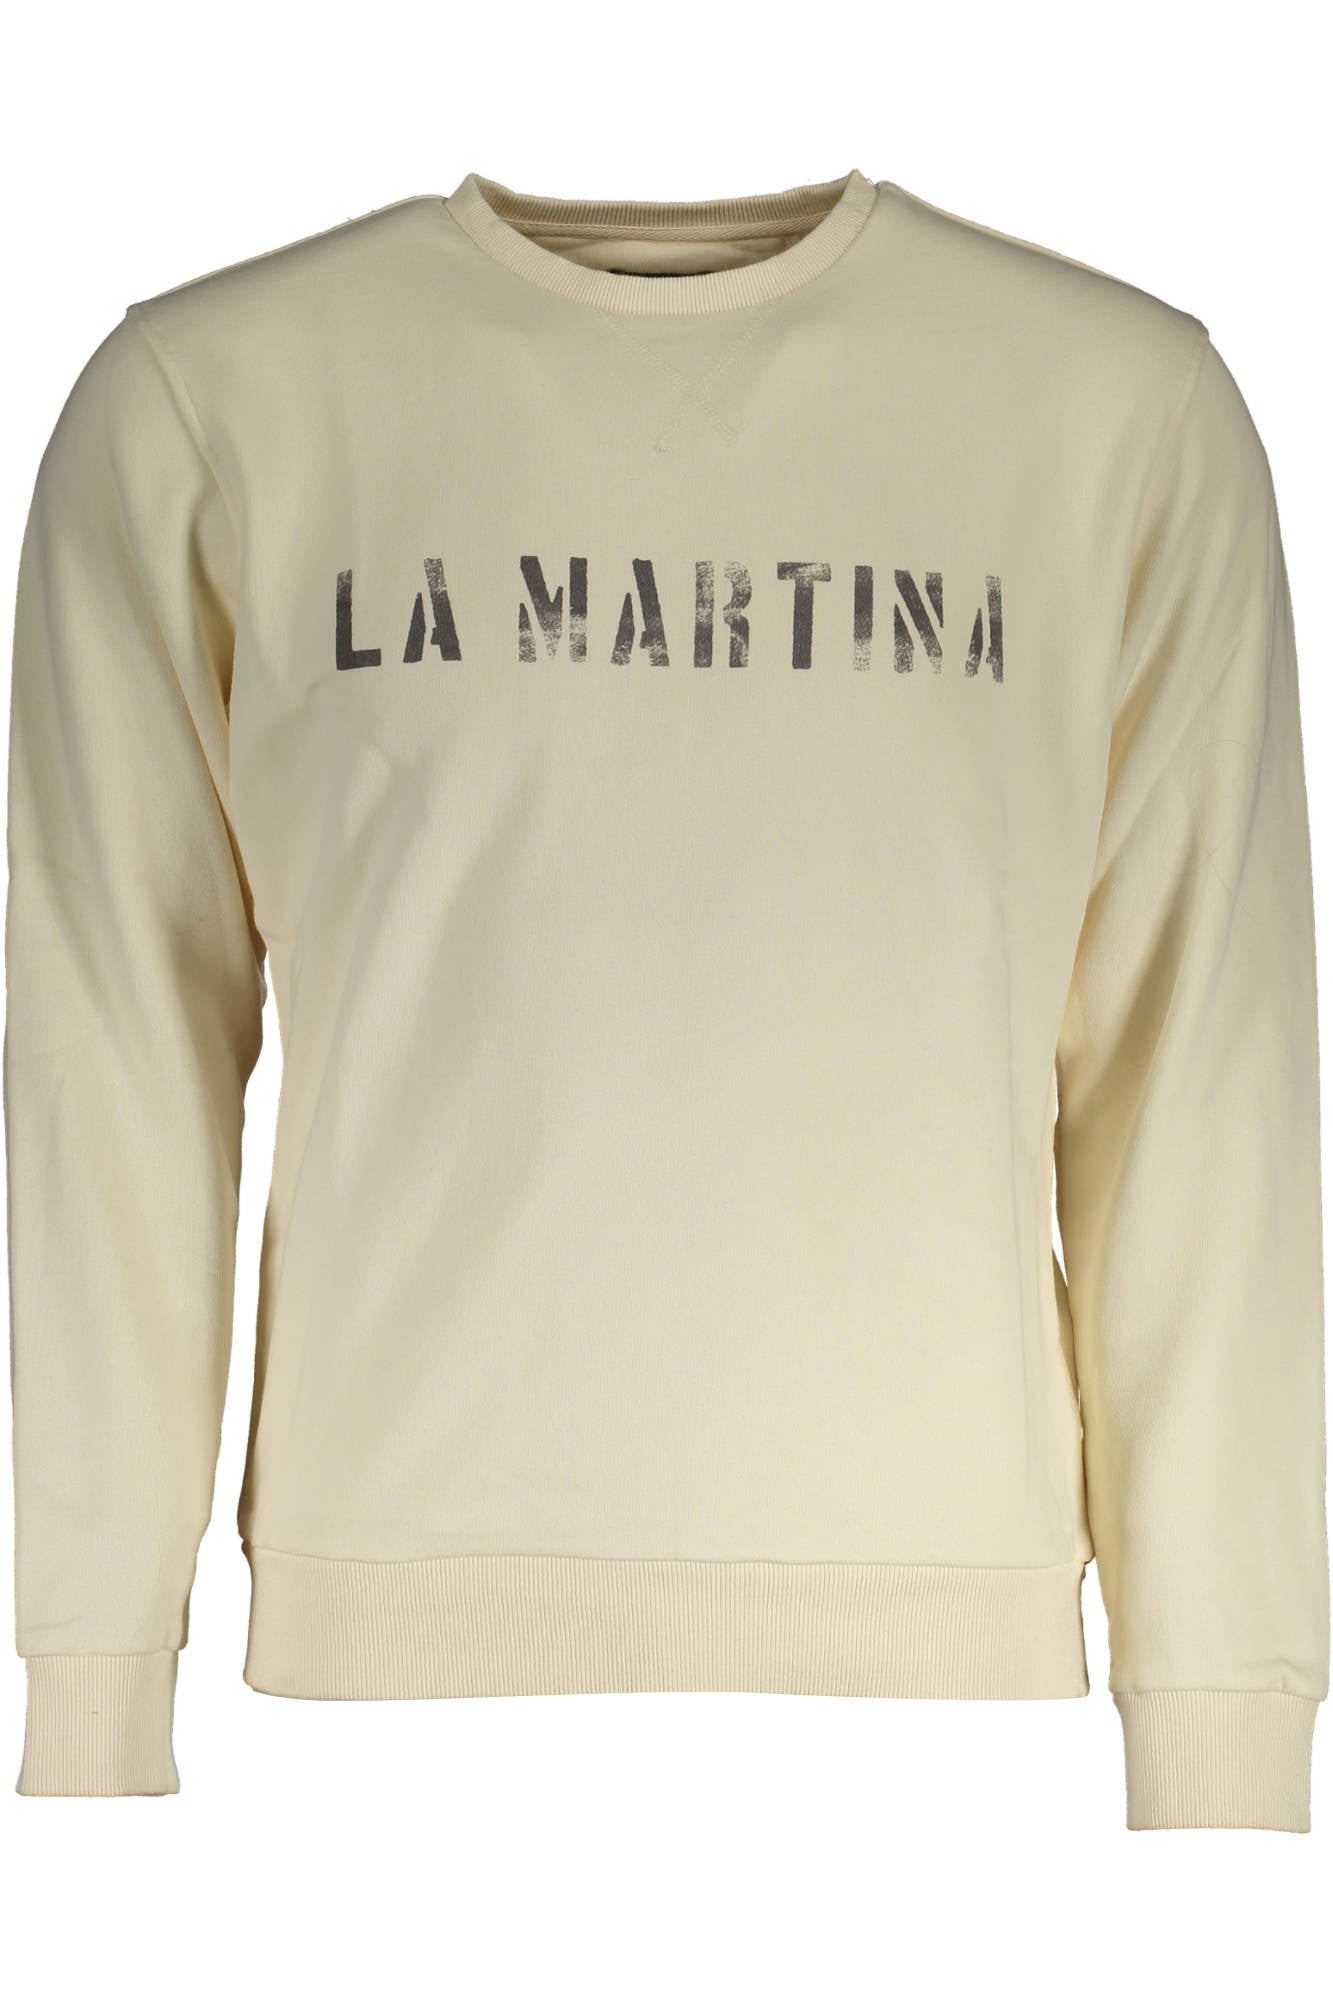 La Martina White Sweater - Fizigo